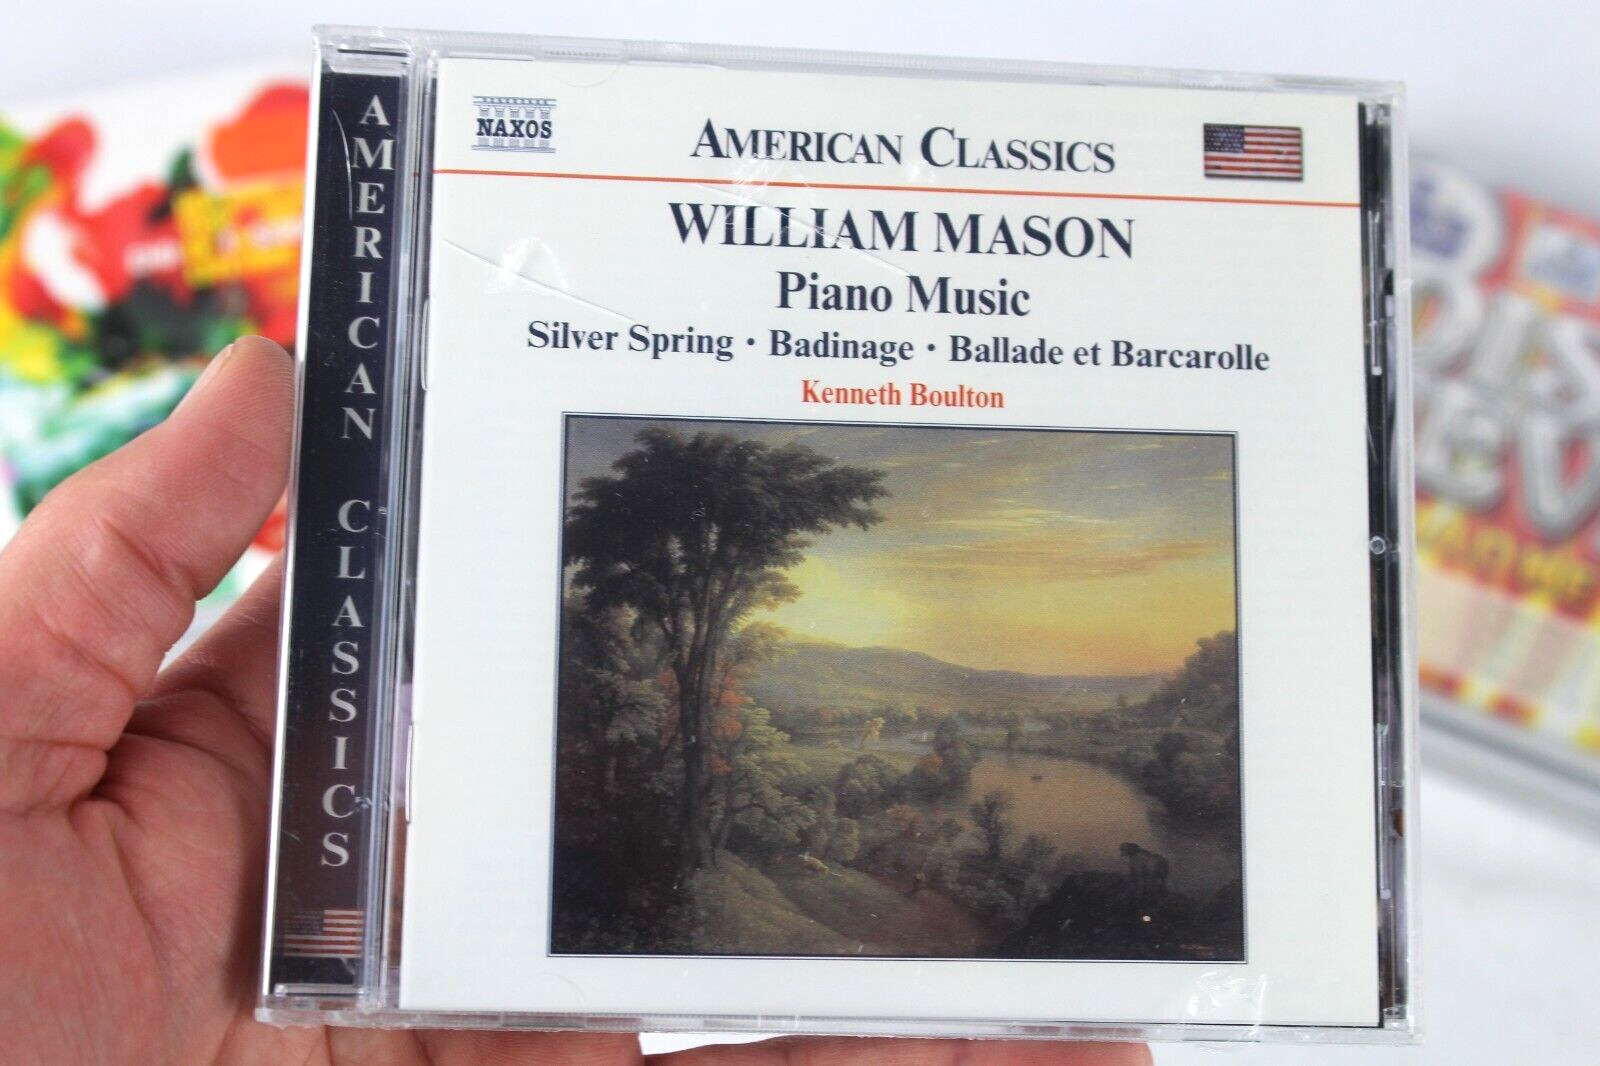 WILLIAM MASON PIANO MUSIC [NEW CD] SILVER SPRING KENNETH BOULTON CLASSICAL 